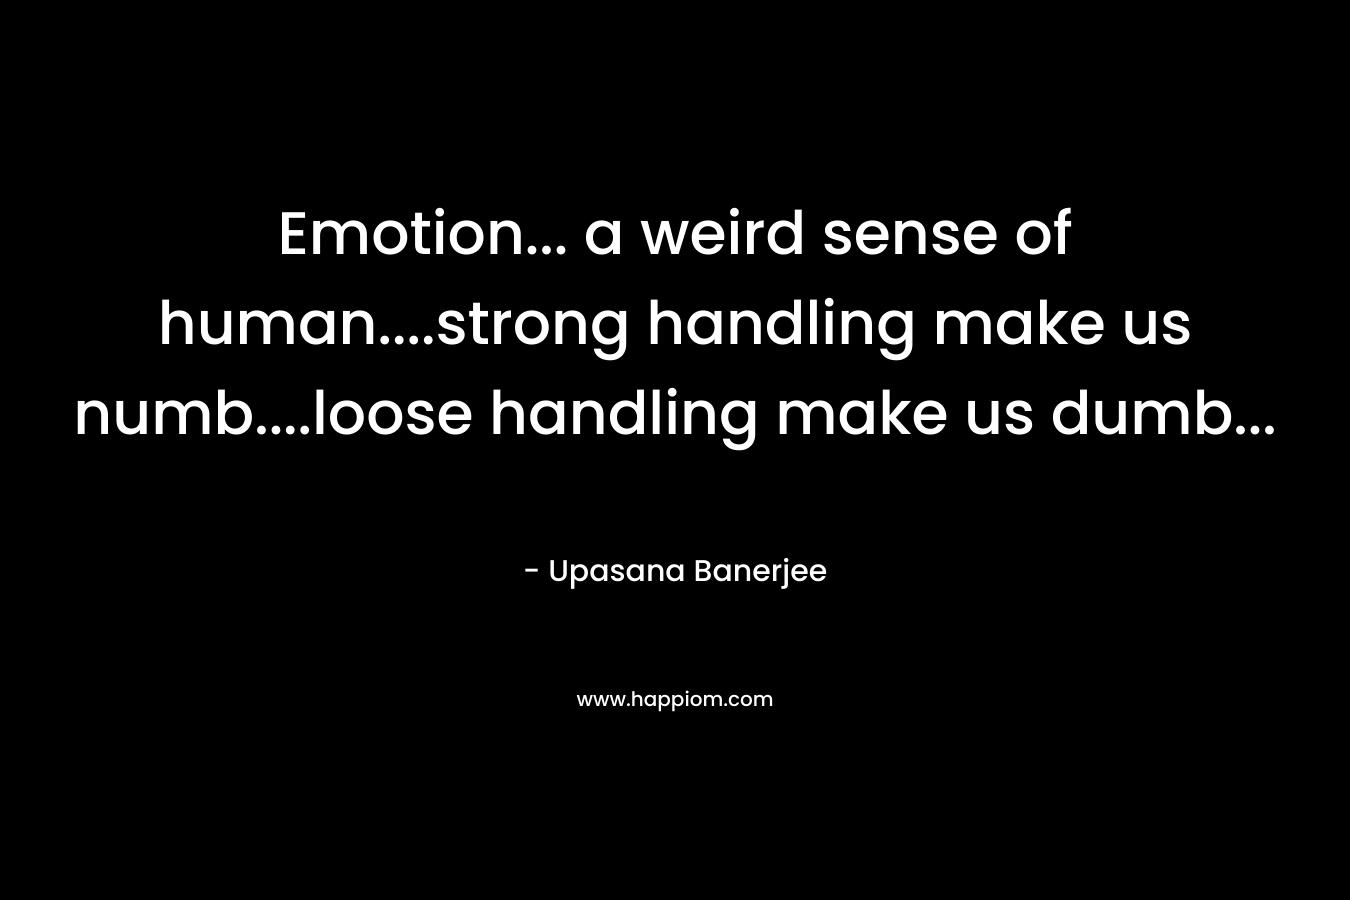 Emotion... a weird sense of human....strong handling make us numb....loose handling make us dumb...